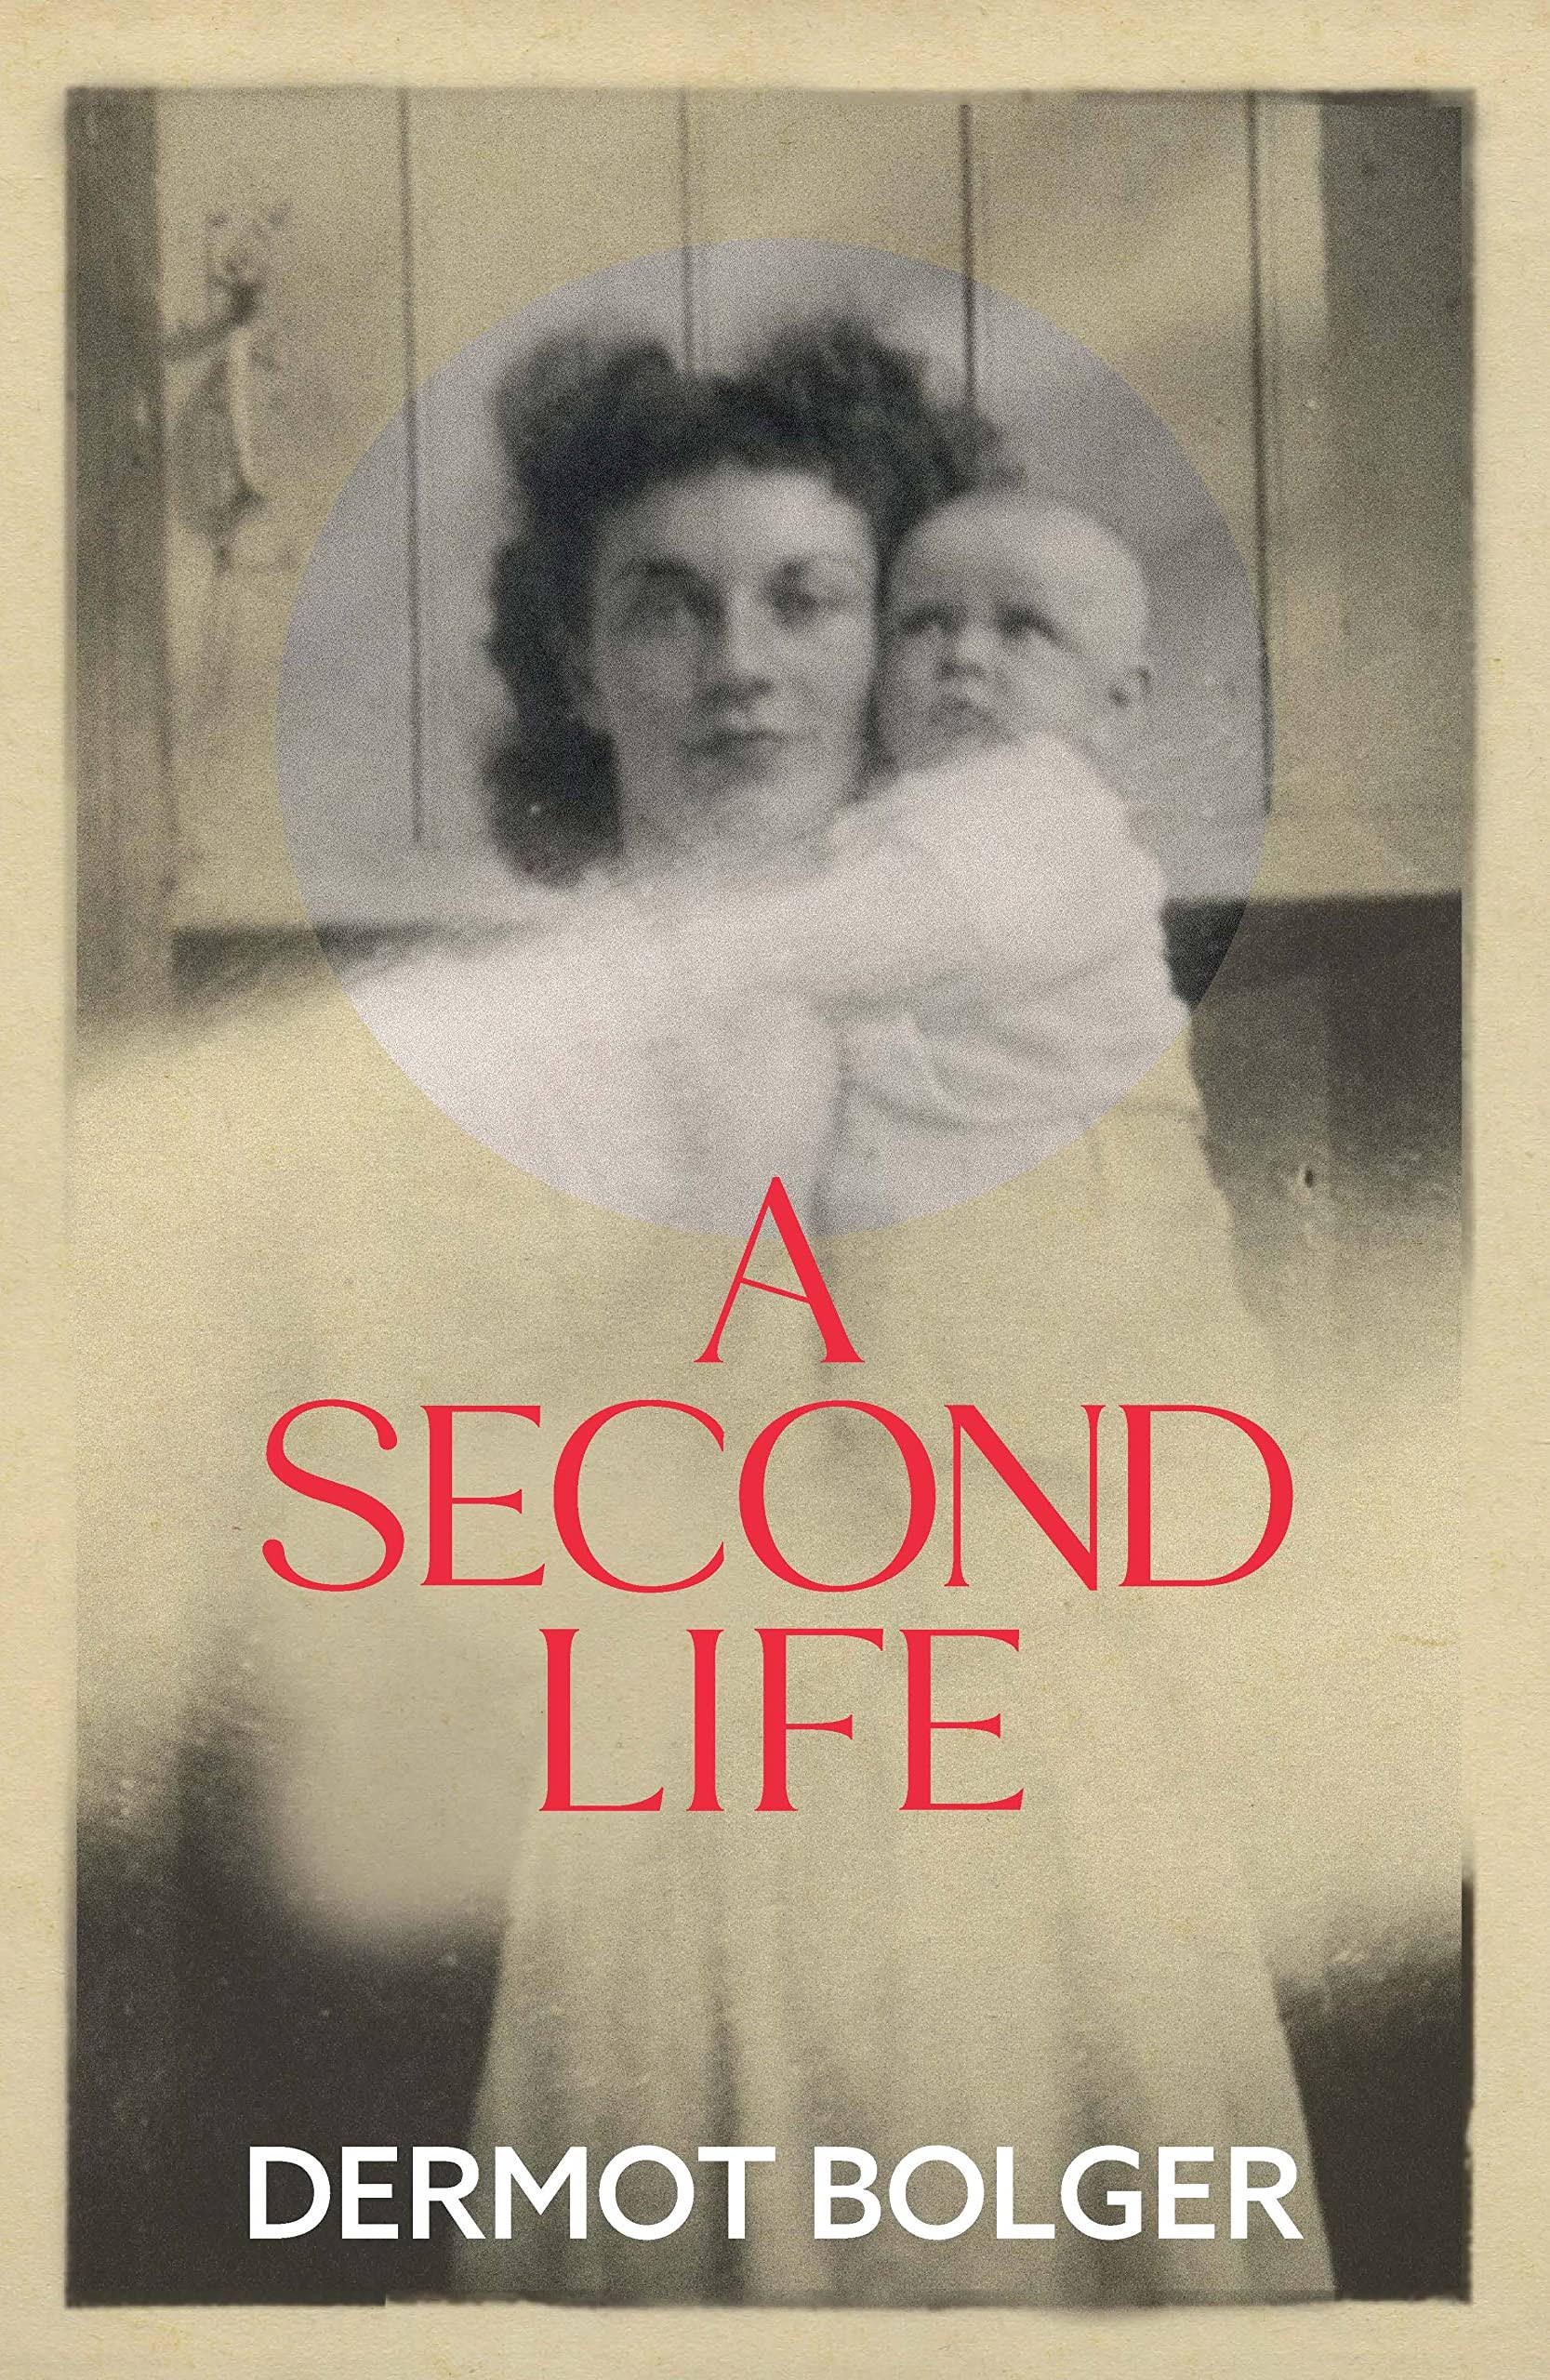 A Second Life [Book]